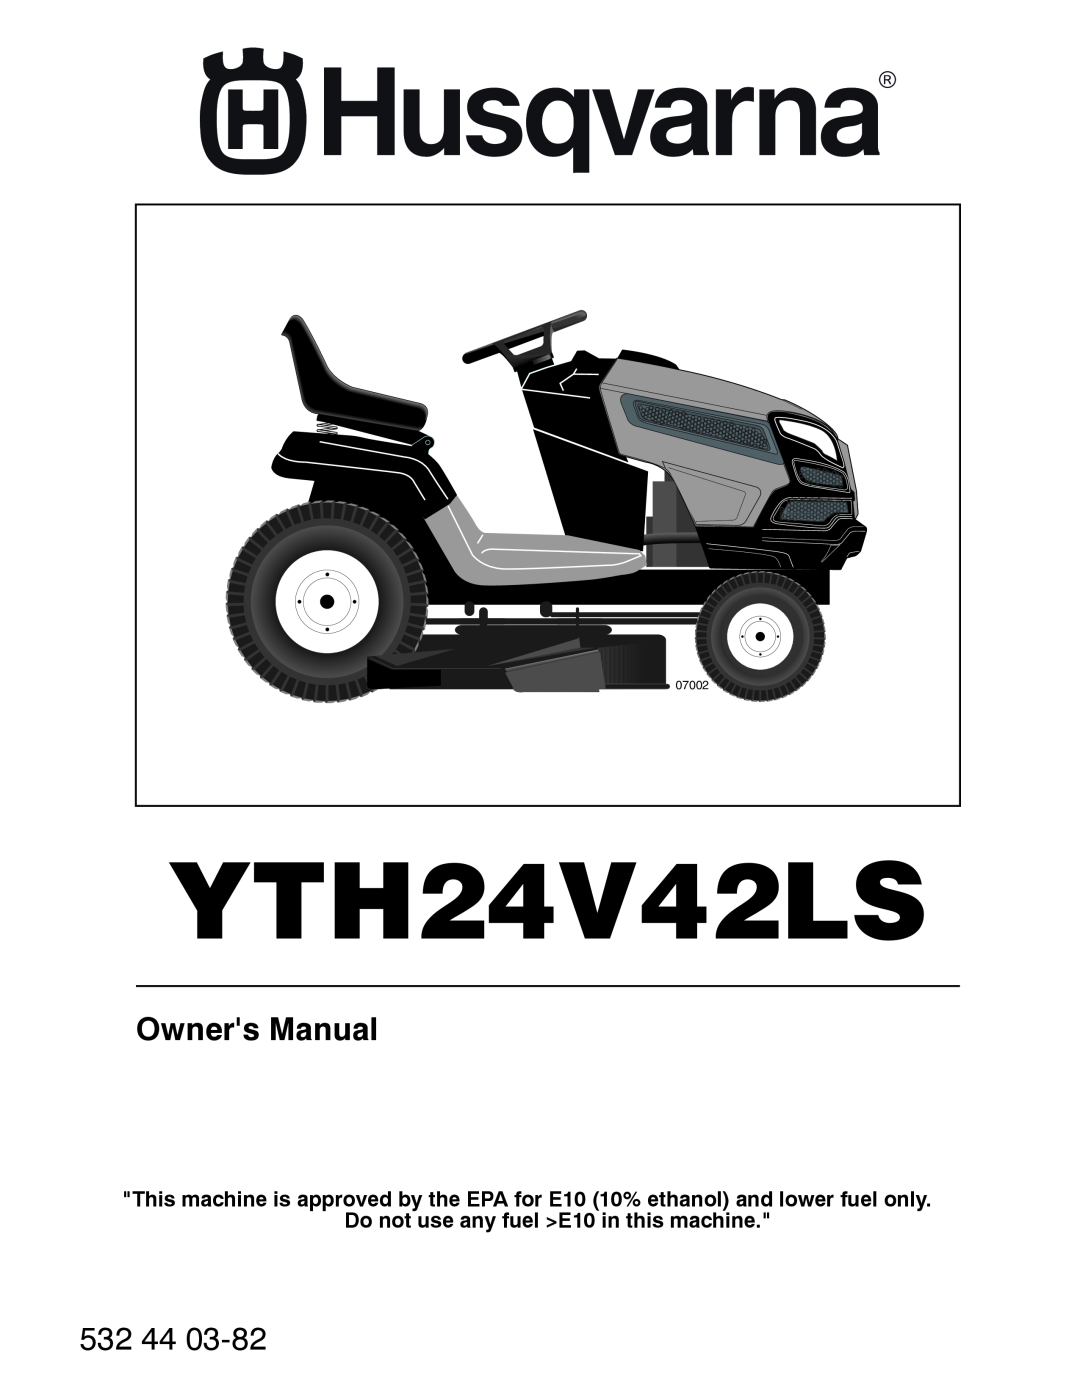 Husqvarna YTH24V42LS owner manual Owners Manual, 532 44, 07002 